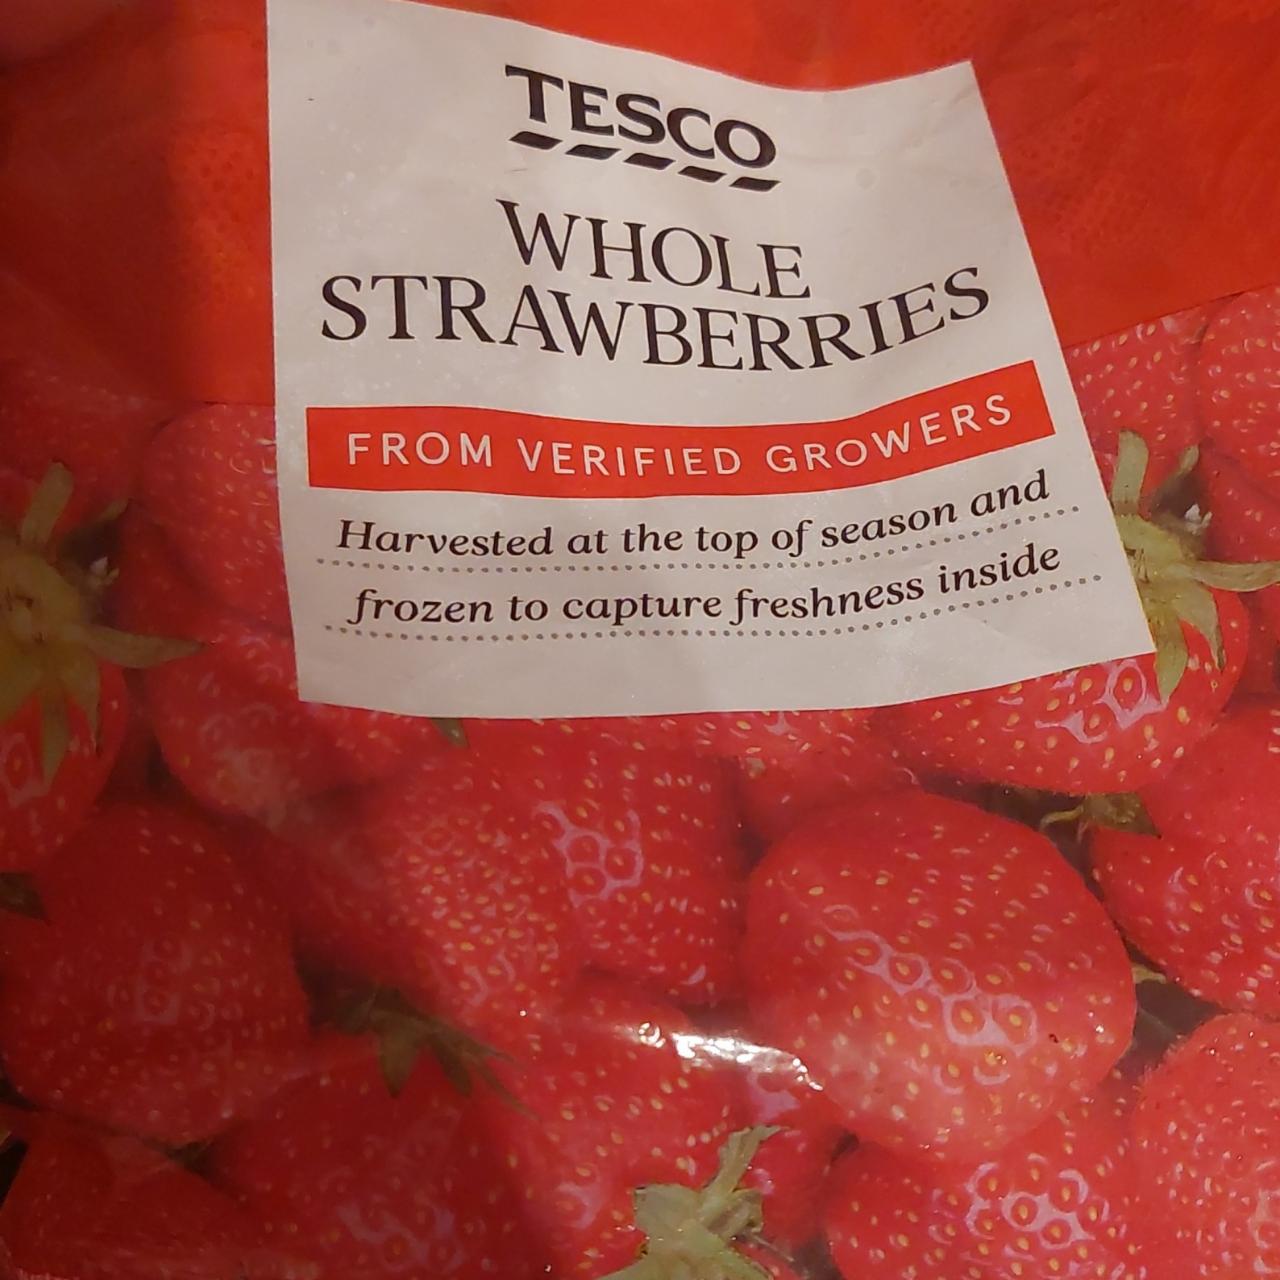 Fotografie - Whole strawberries Tesco